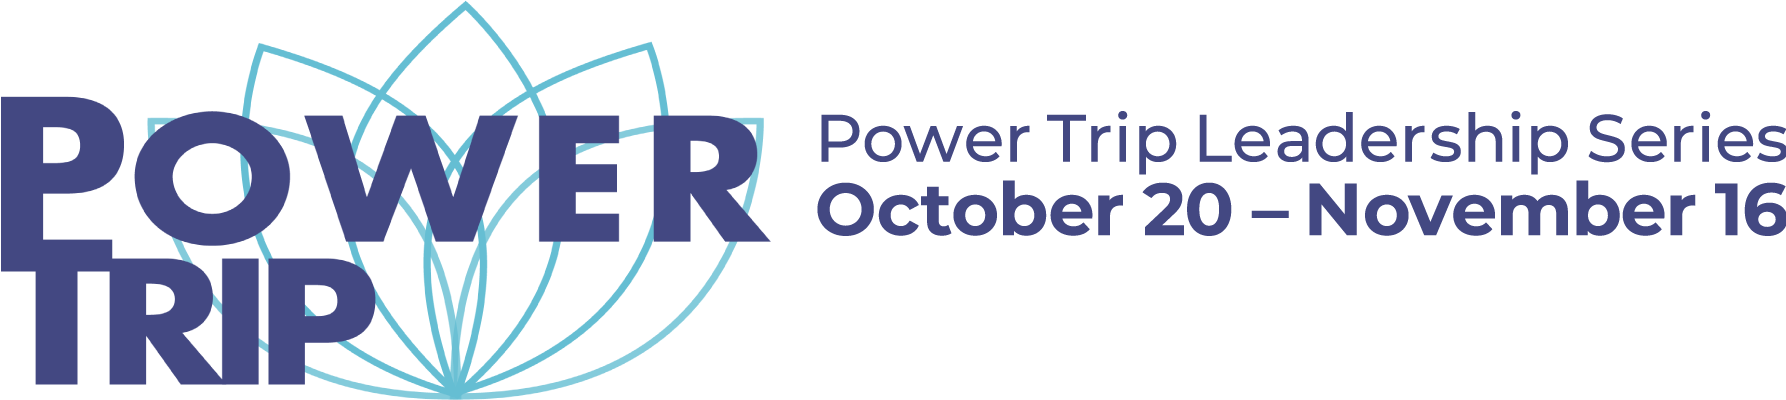 Powertrtip logo